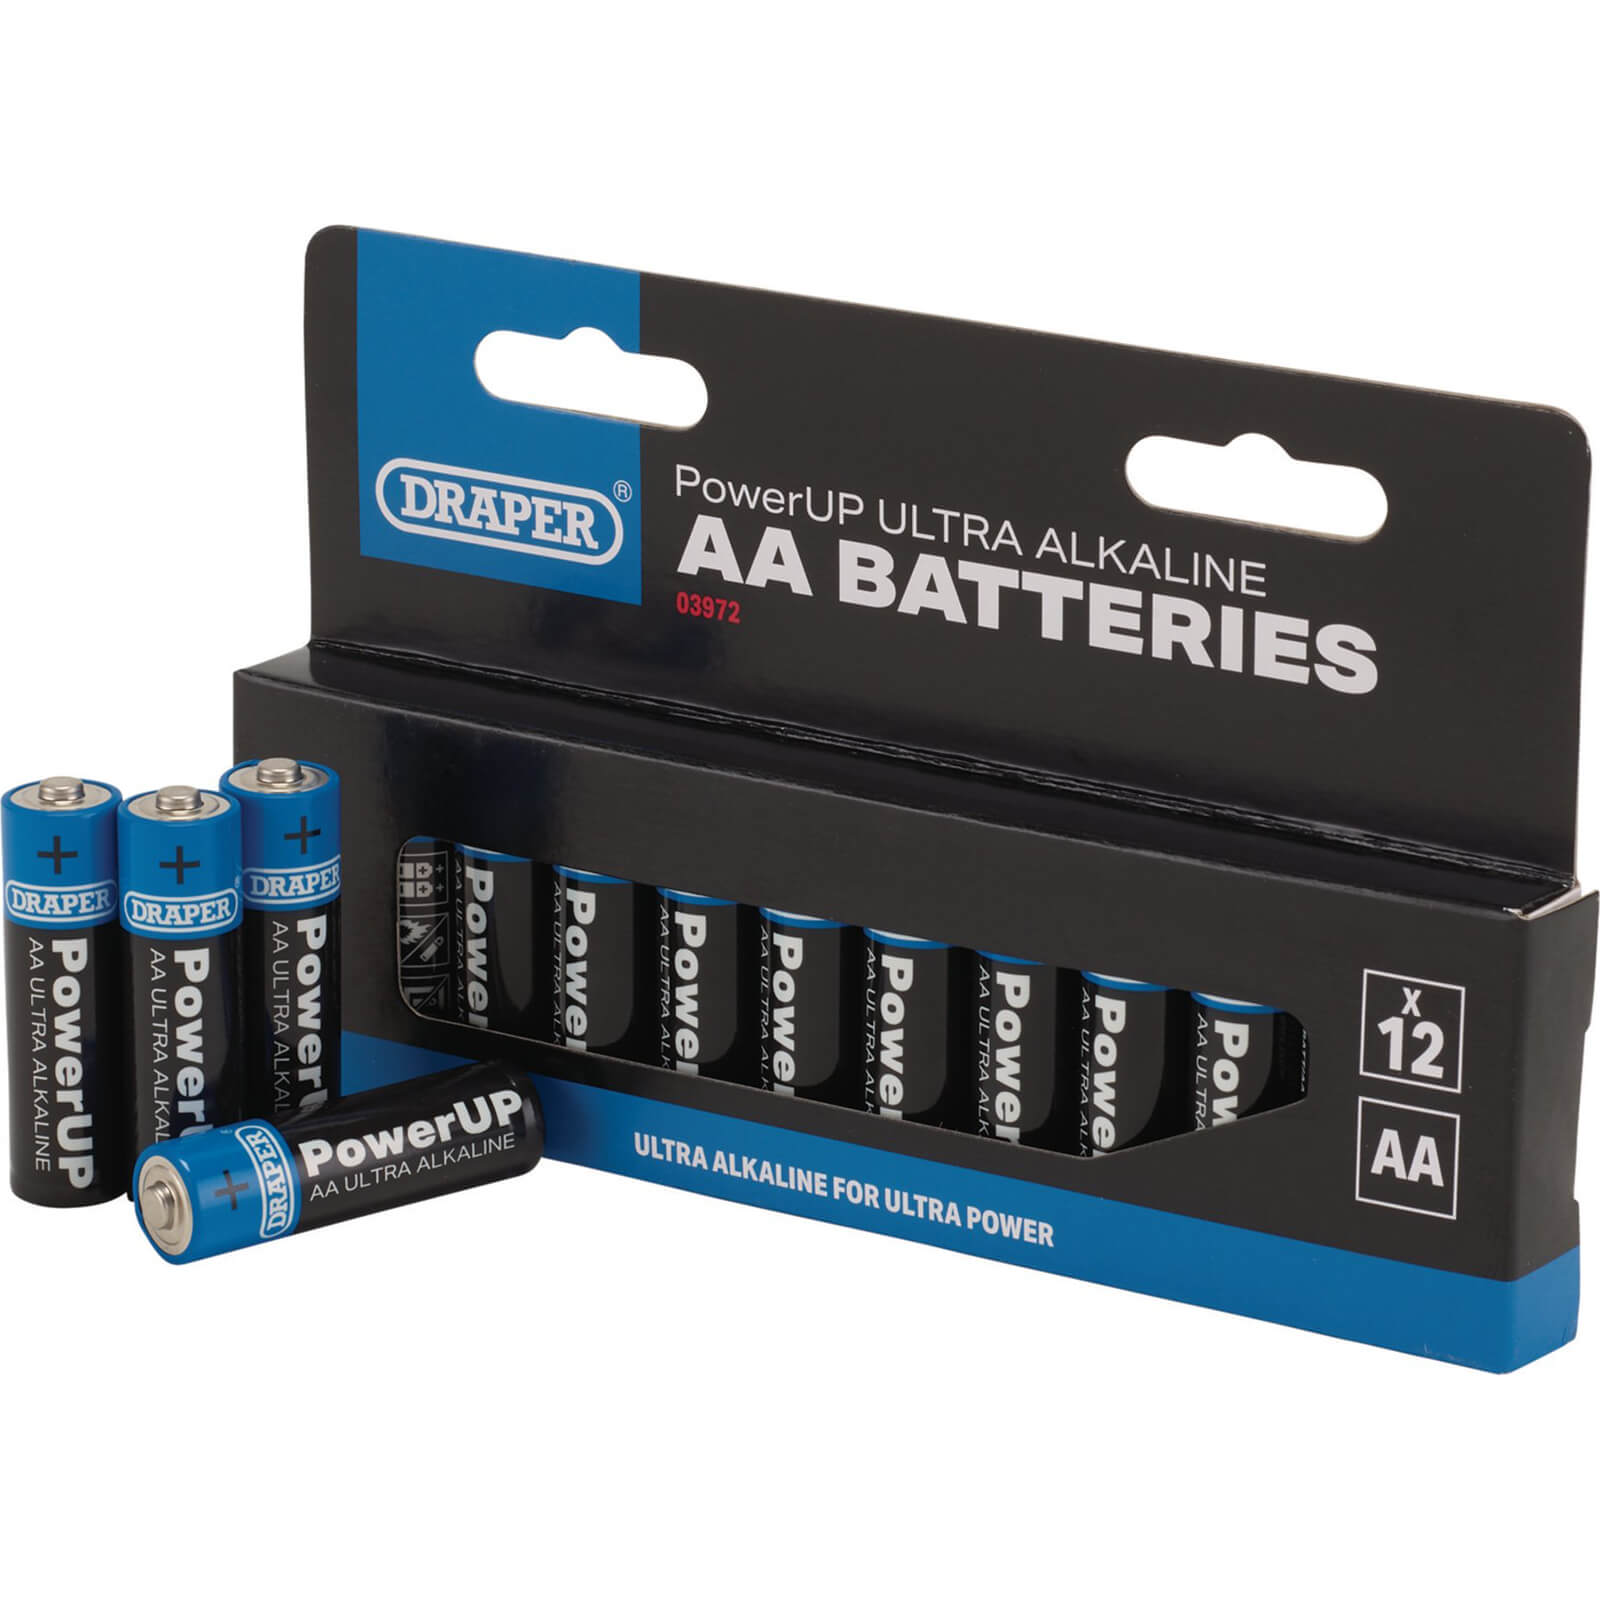 Image of Draper Powerup Ultra Alkaline AA Batteries Pack of 12